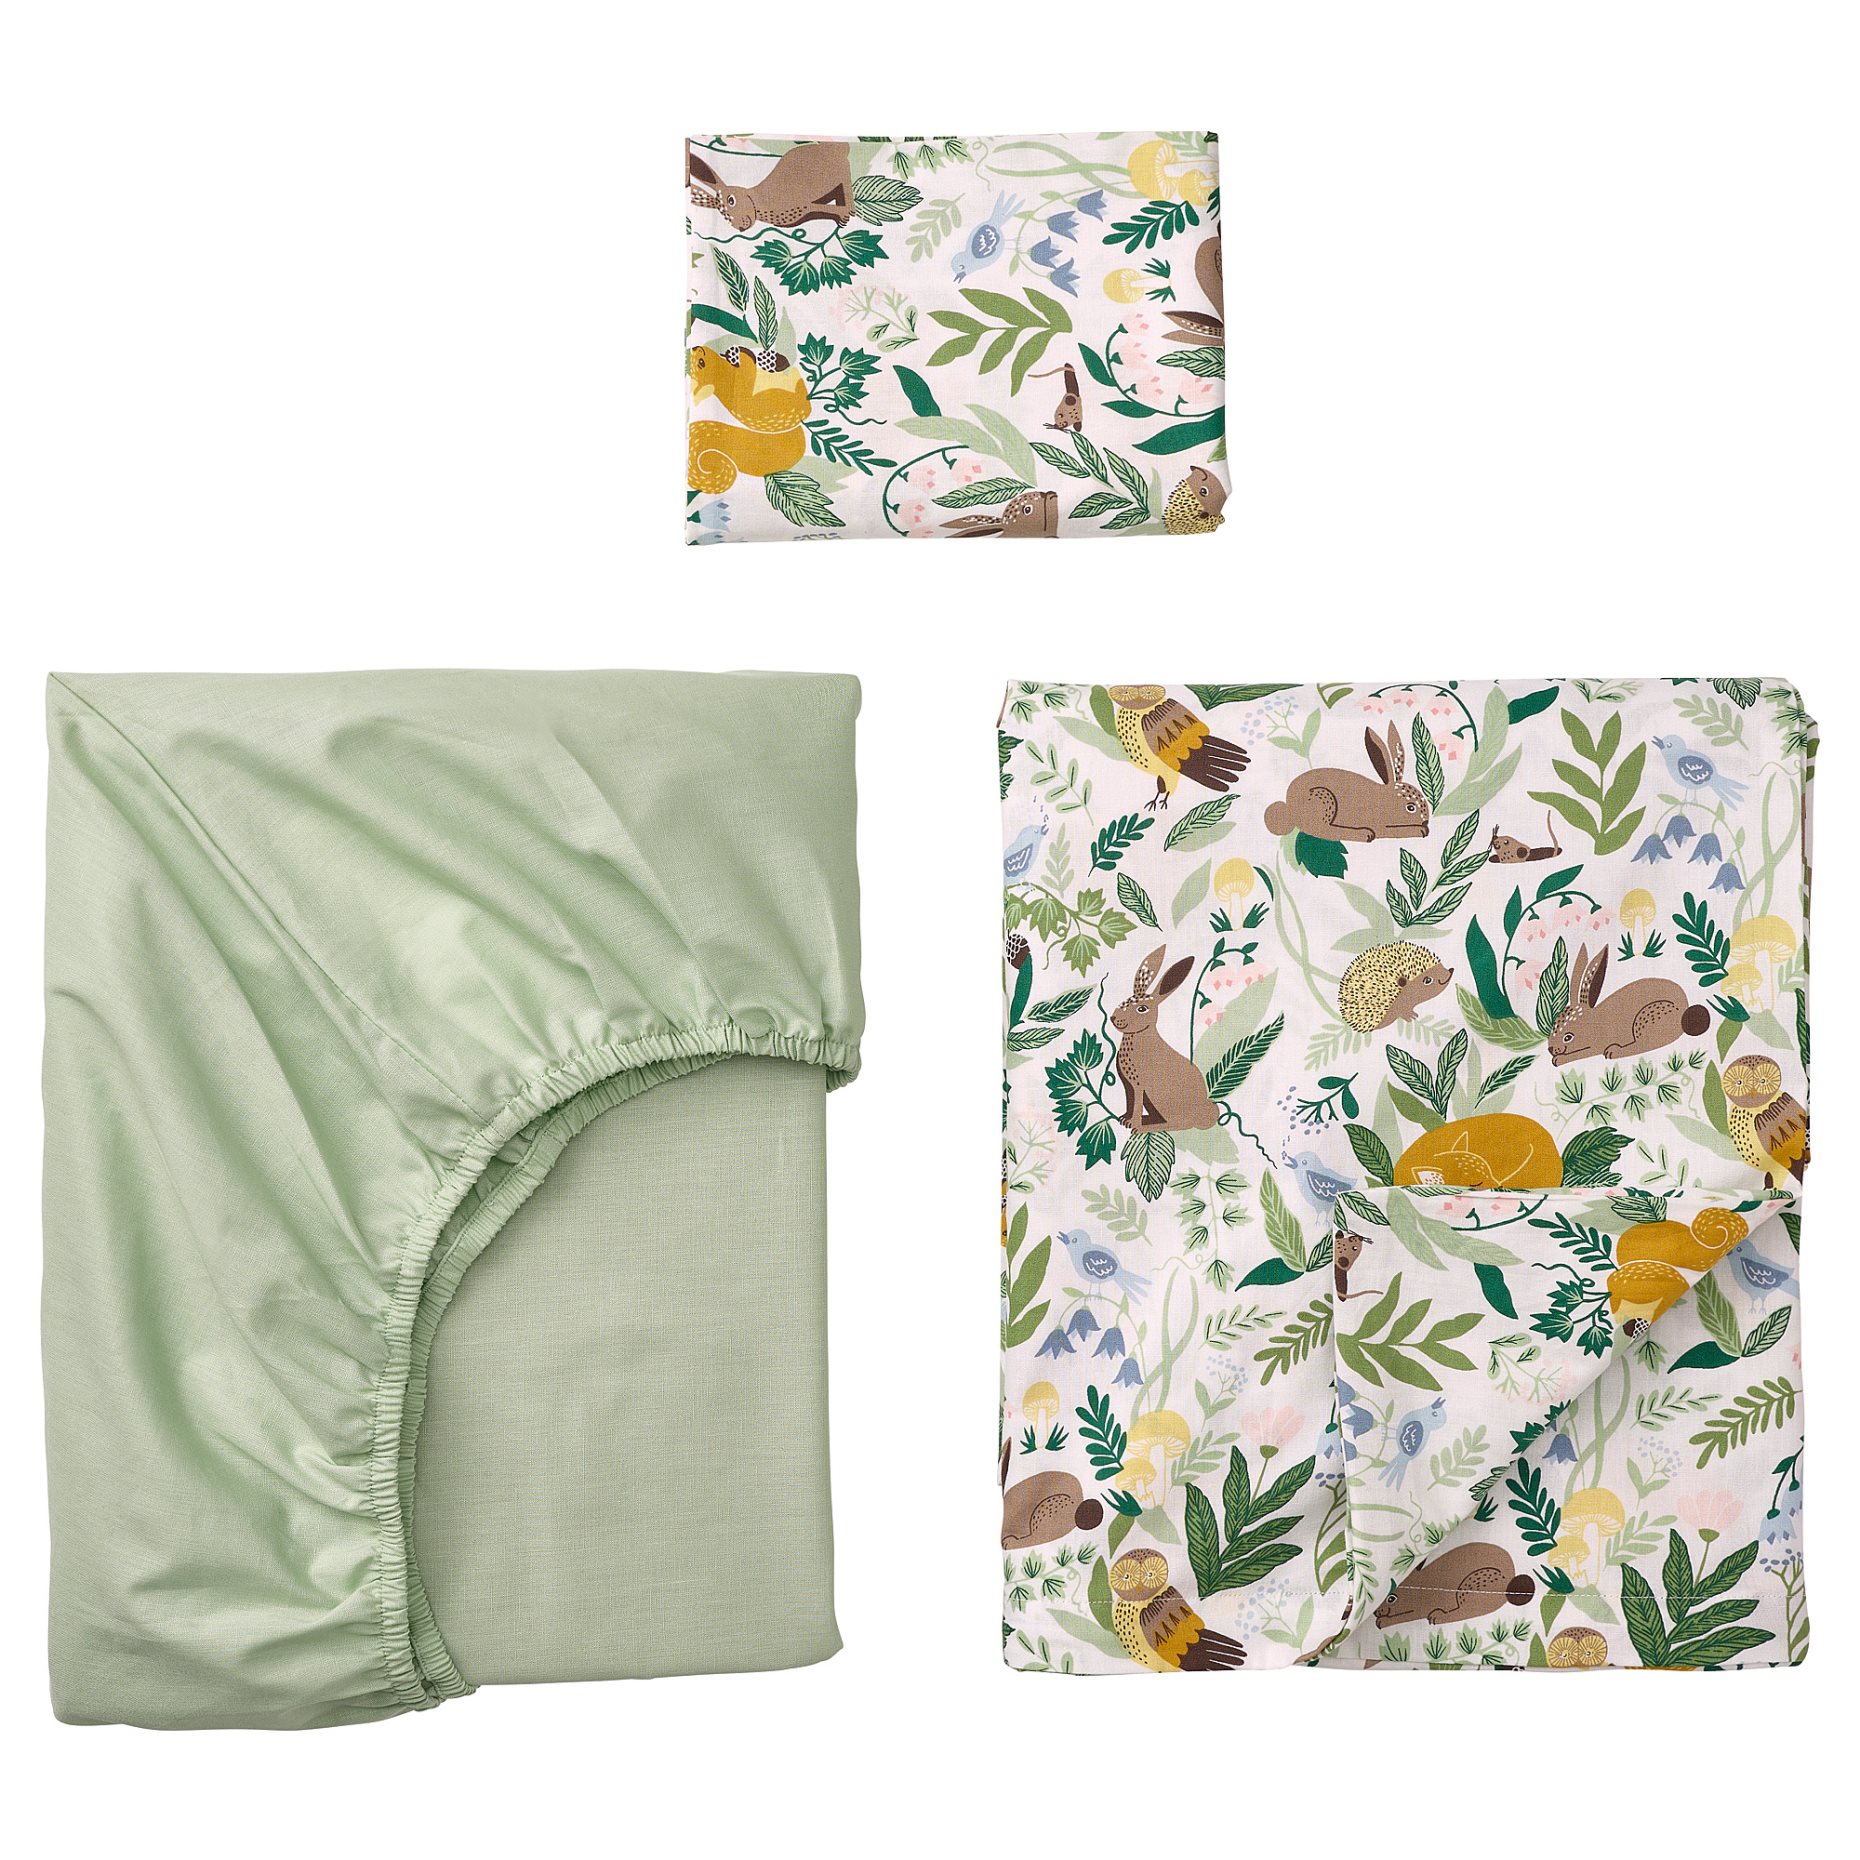 TROLLDOM, 3-piece bedlinen set for cot/forest animal pattern, 70x140 cm, 205.151.35